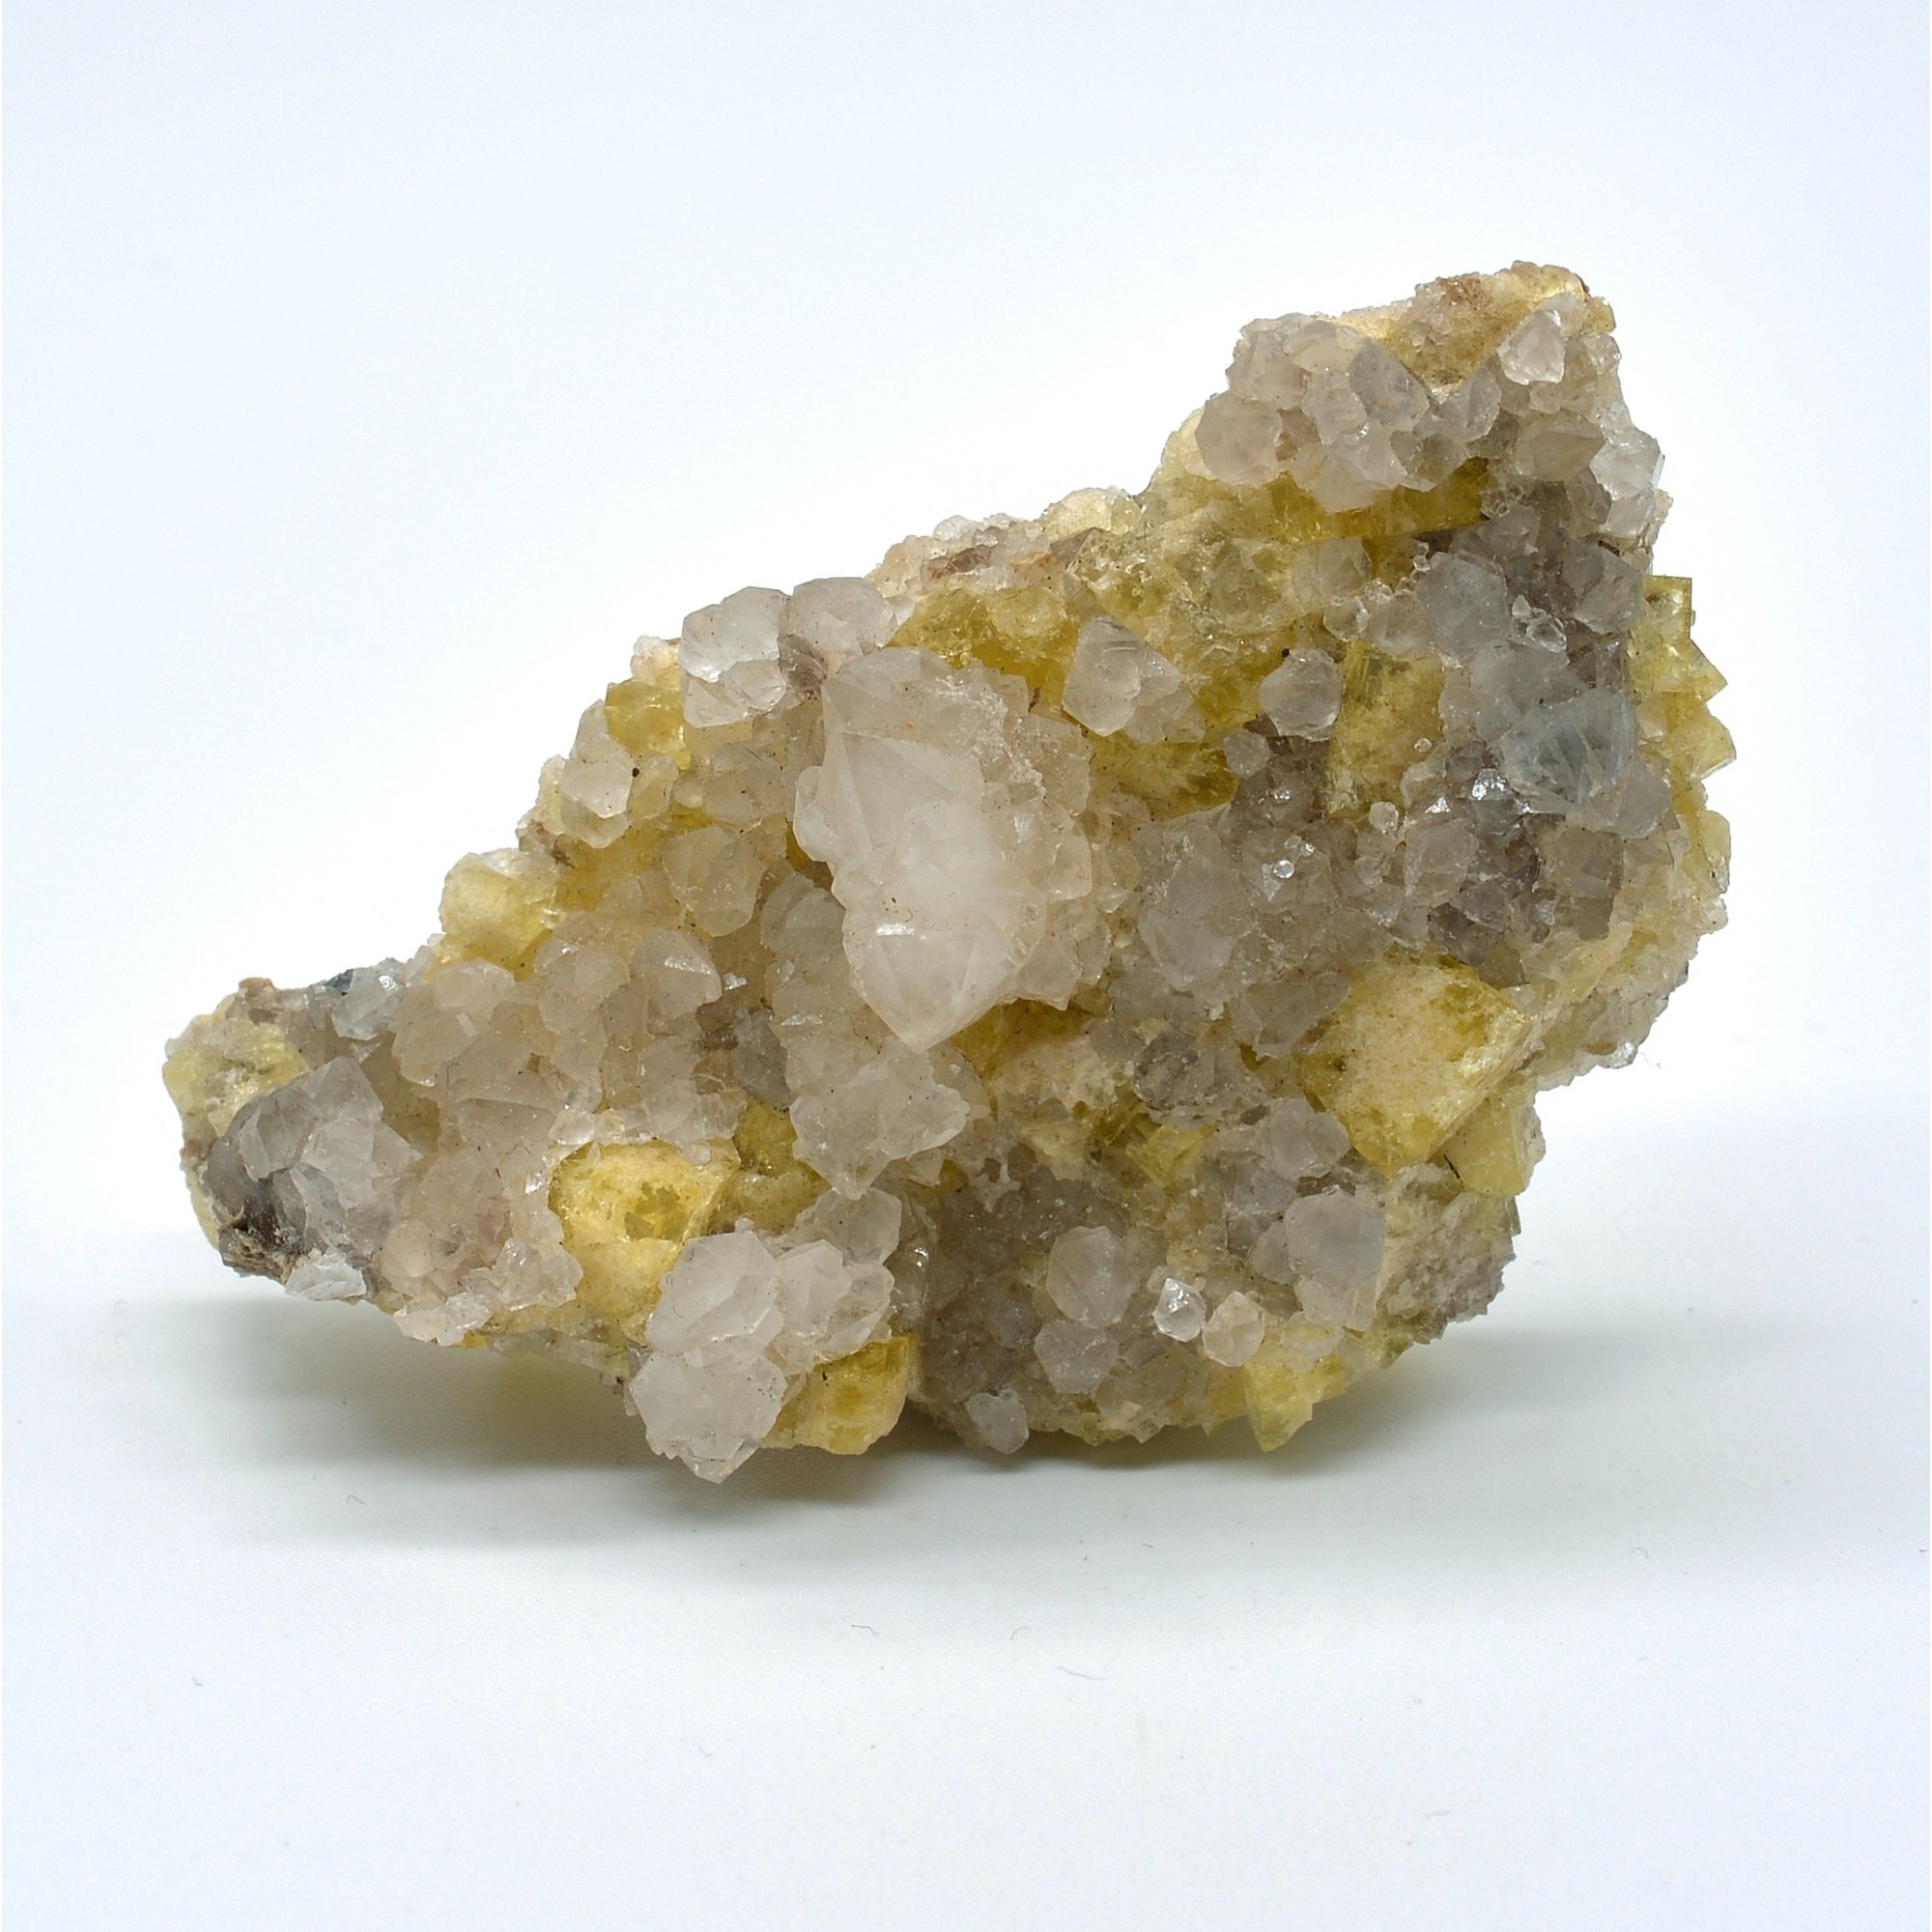 Fluorite and quartz, Peyrebrune, Tarn, France.